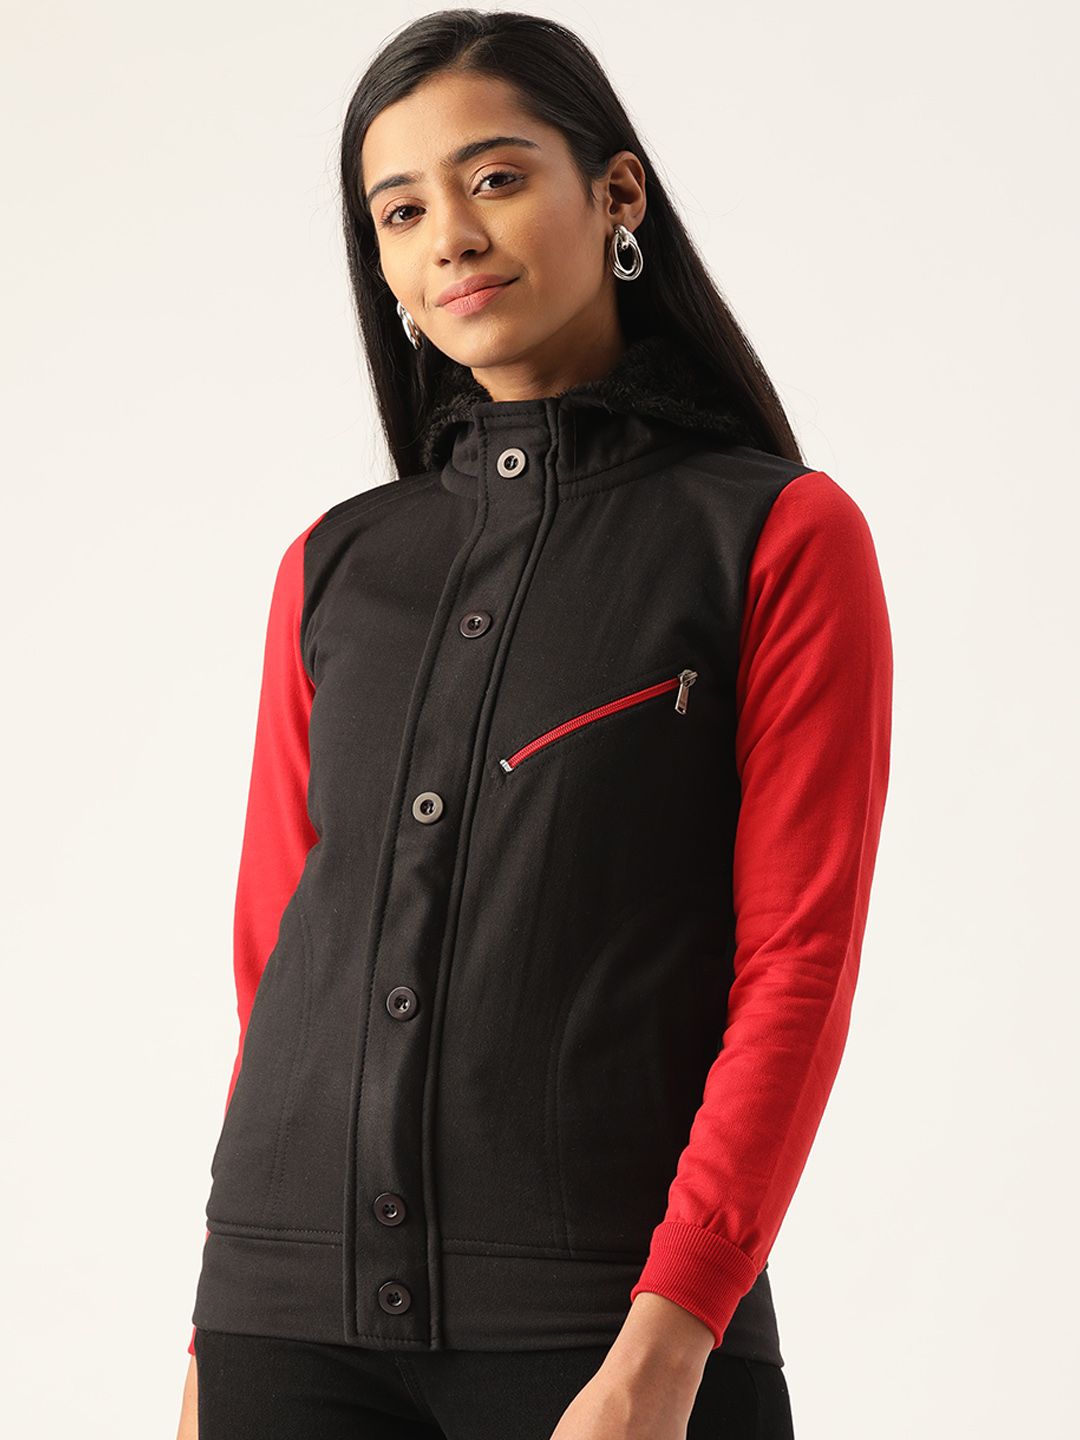 Belle Fille Women Black & Red Solid Hooded Sweatshirt Price in India